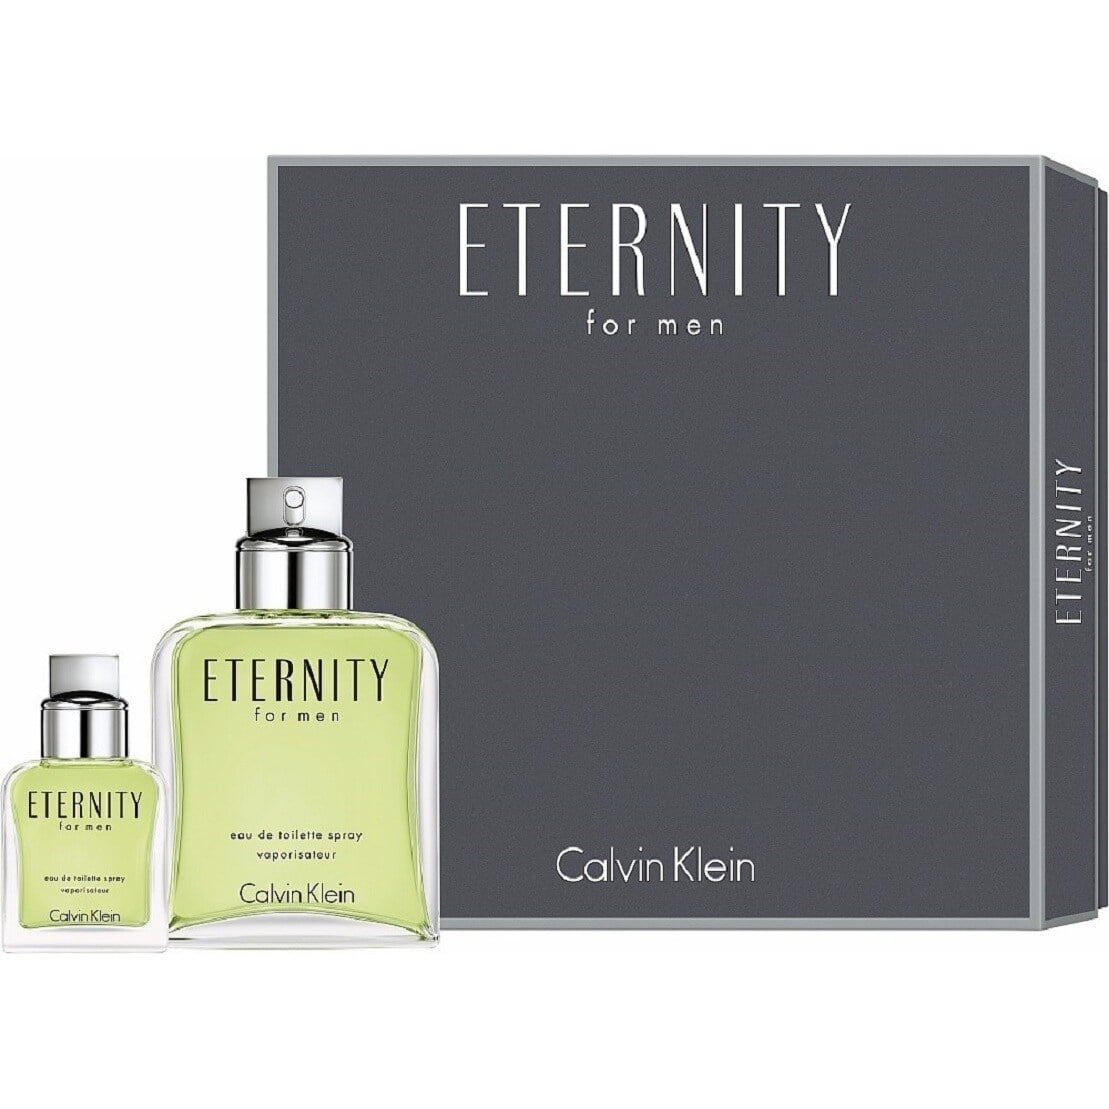 Calvin Klein Beauty Eternity Cologne Gift Set for Men, 2 Pieces -  